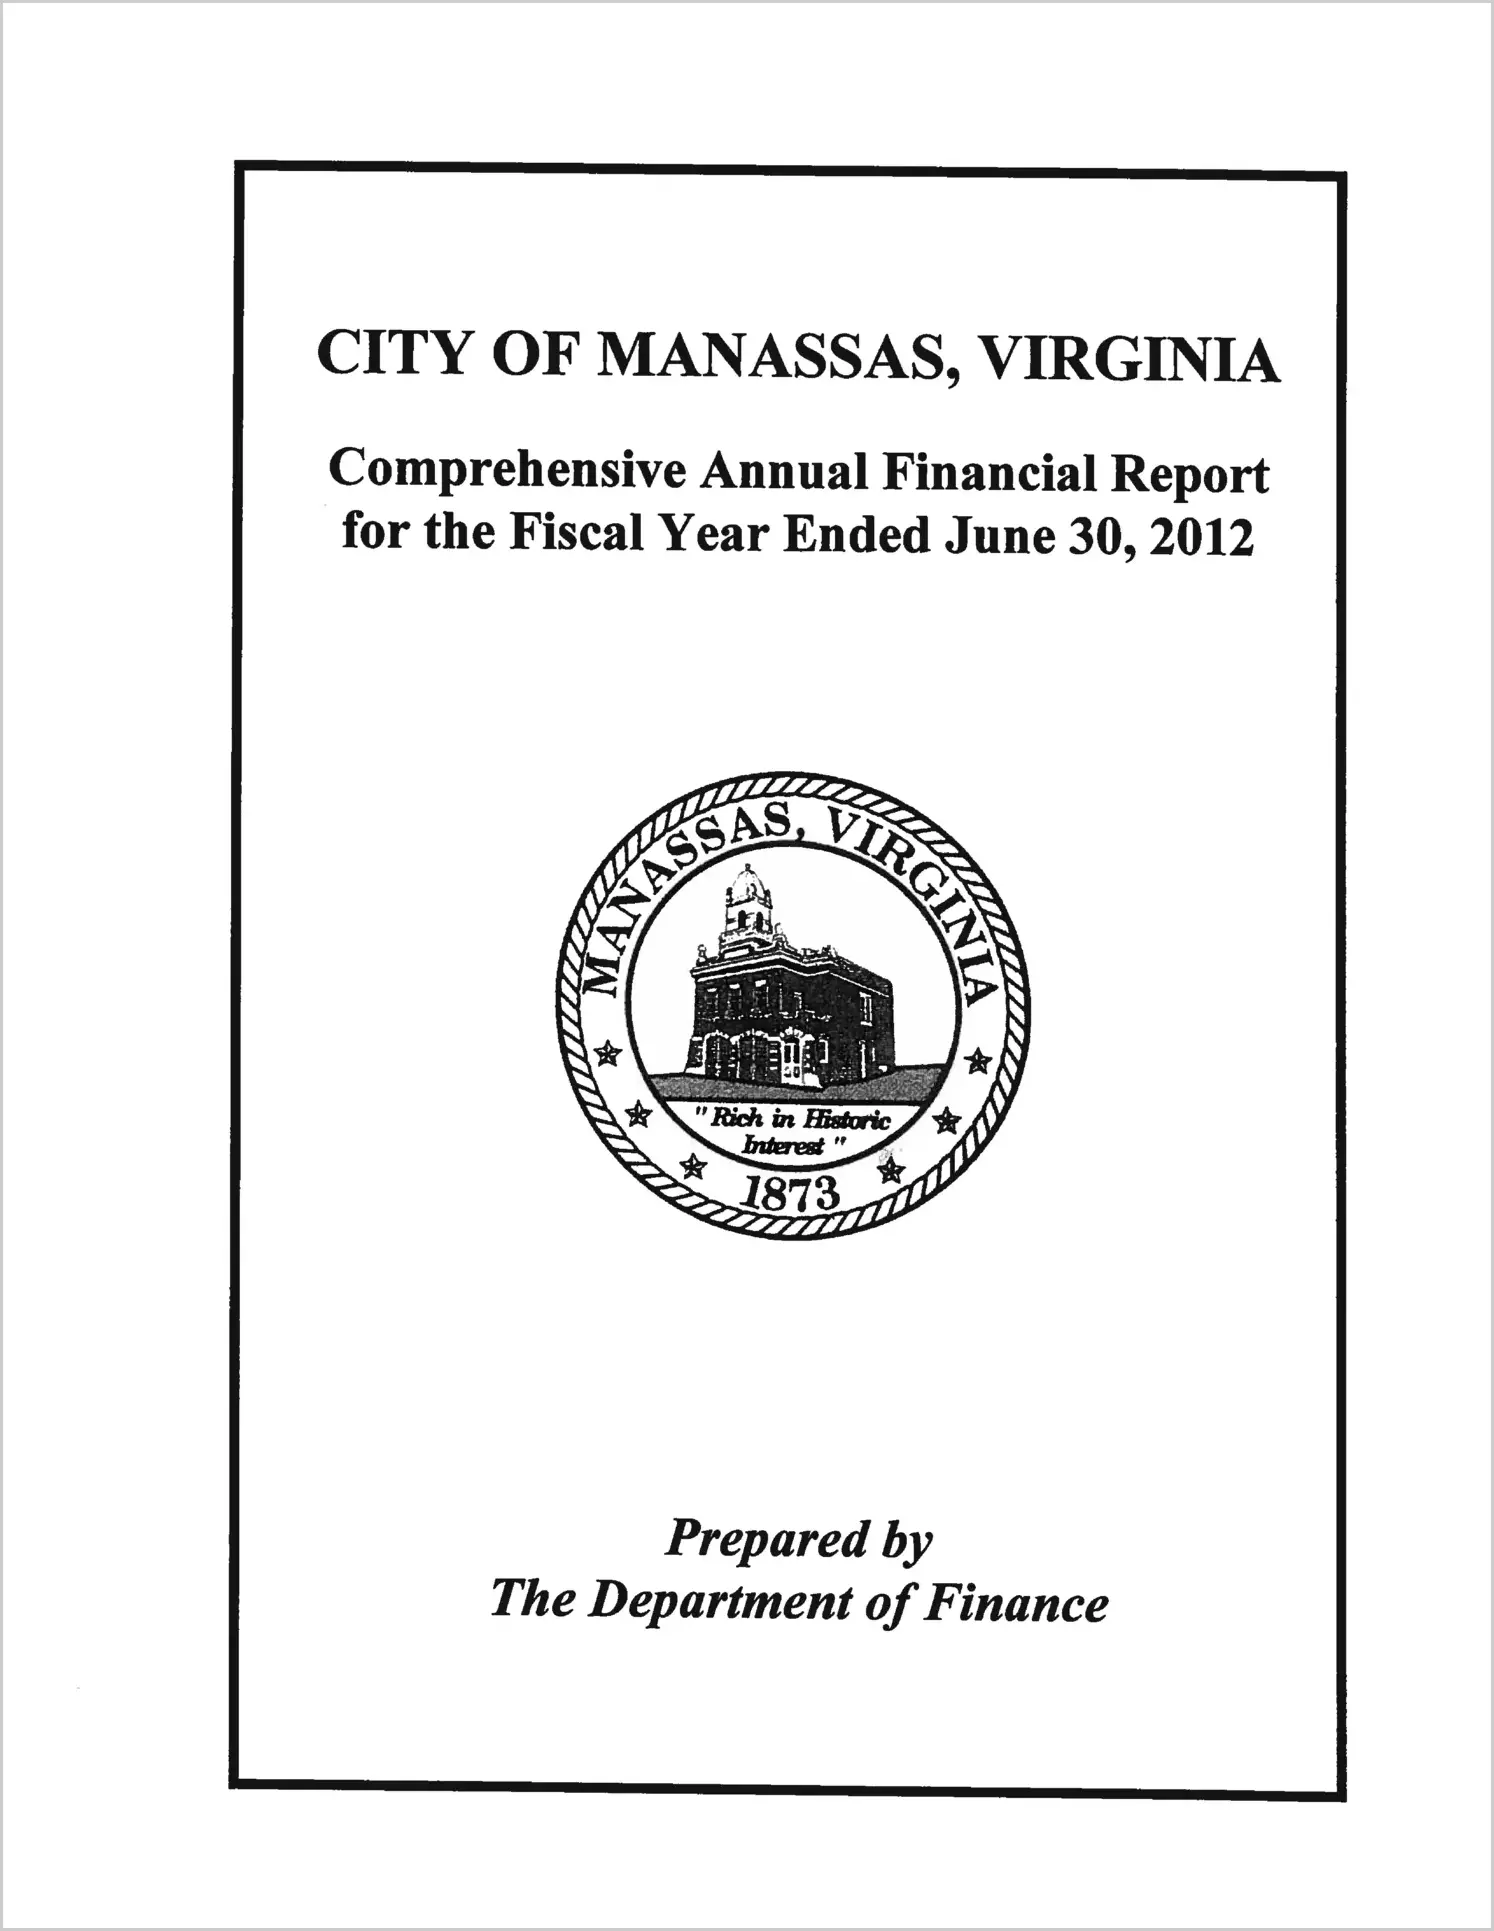 2012 Annual Financial Report for City of Manassas